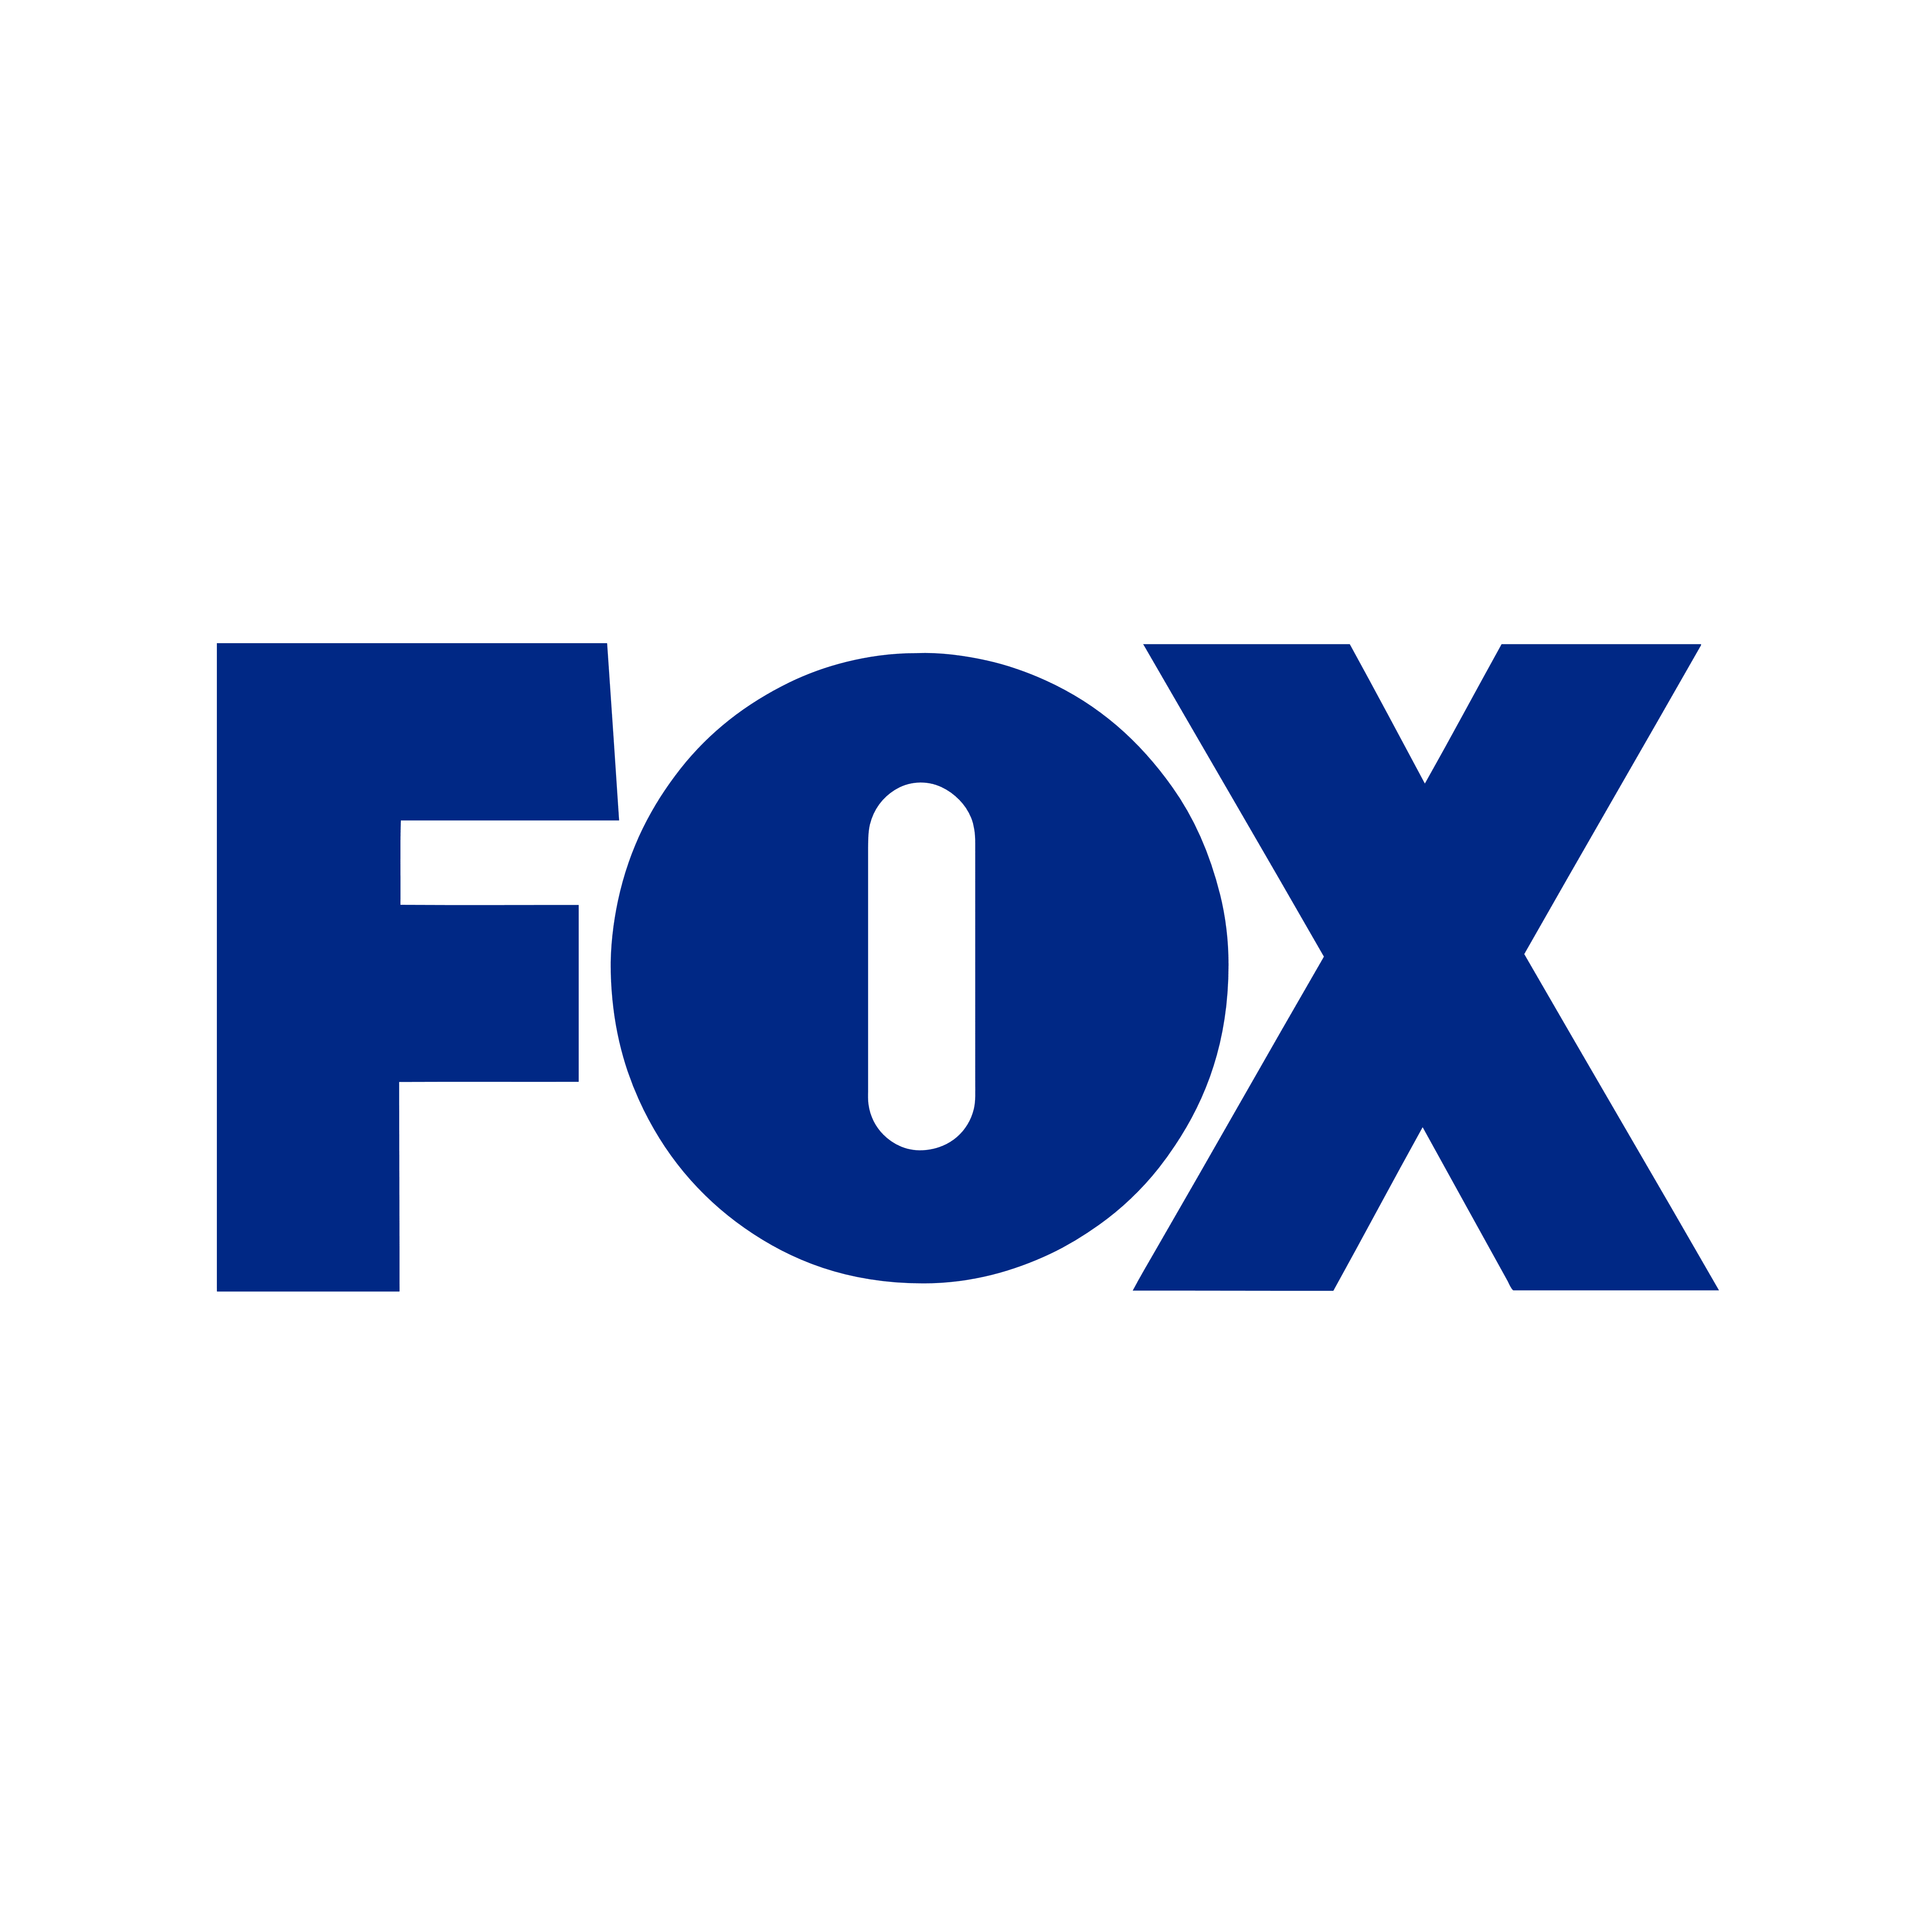 logo fox png-6-min.png